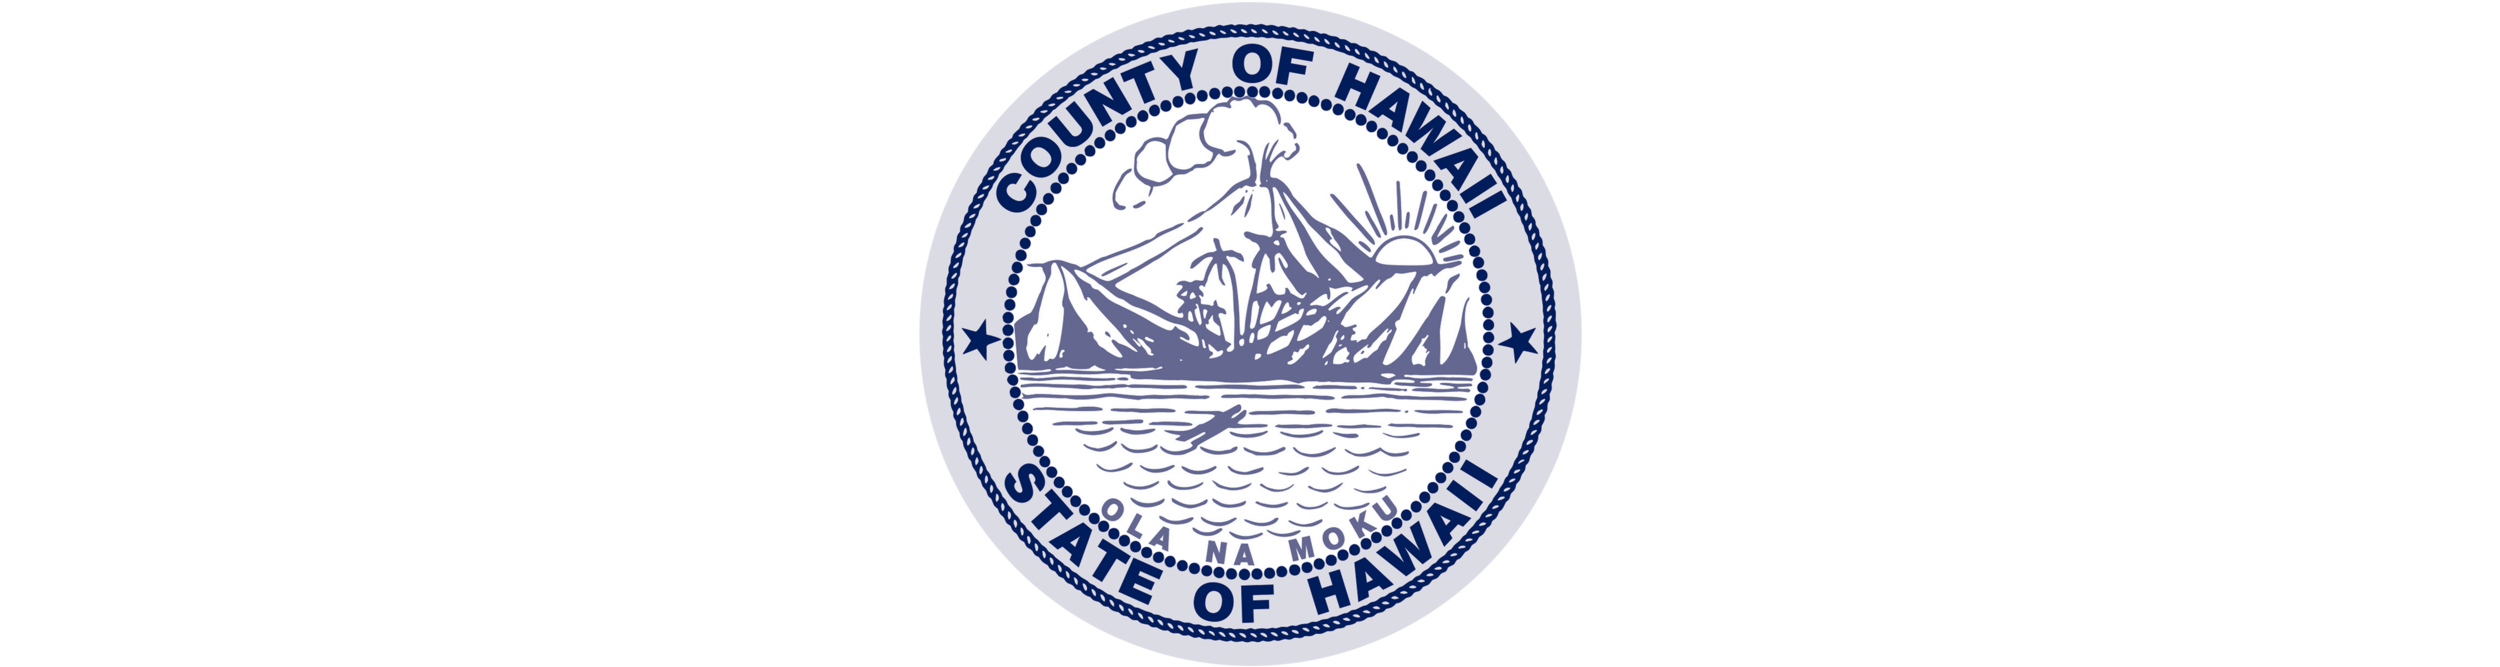 HPHA-ressourcen-logo-Hawaii-County.png